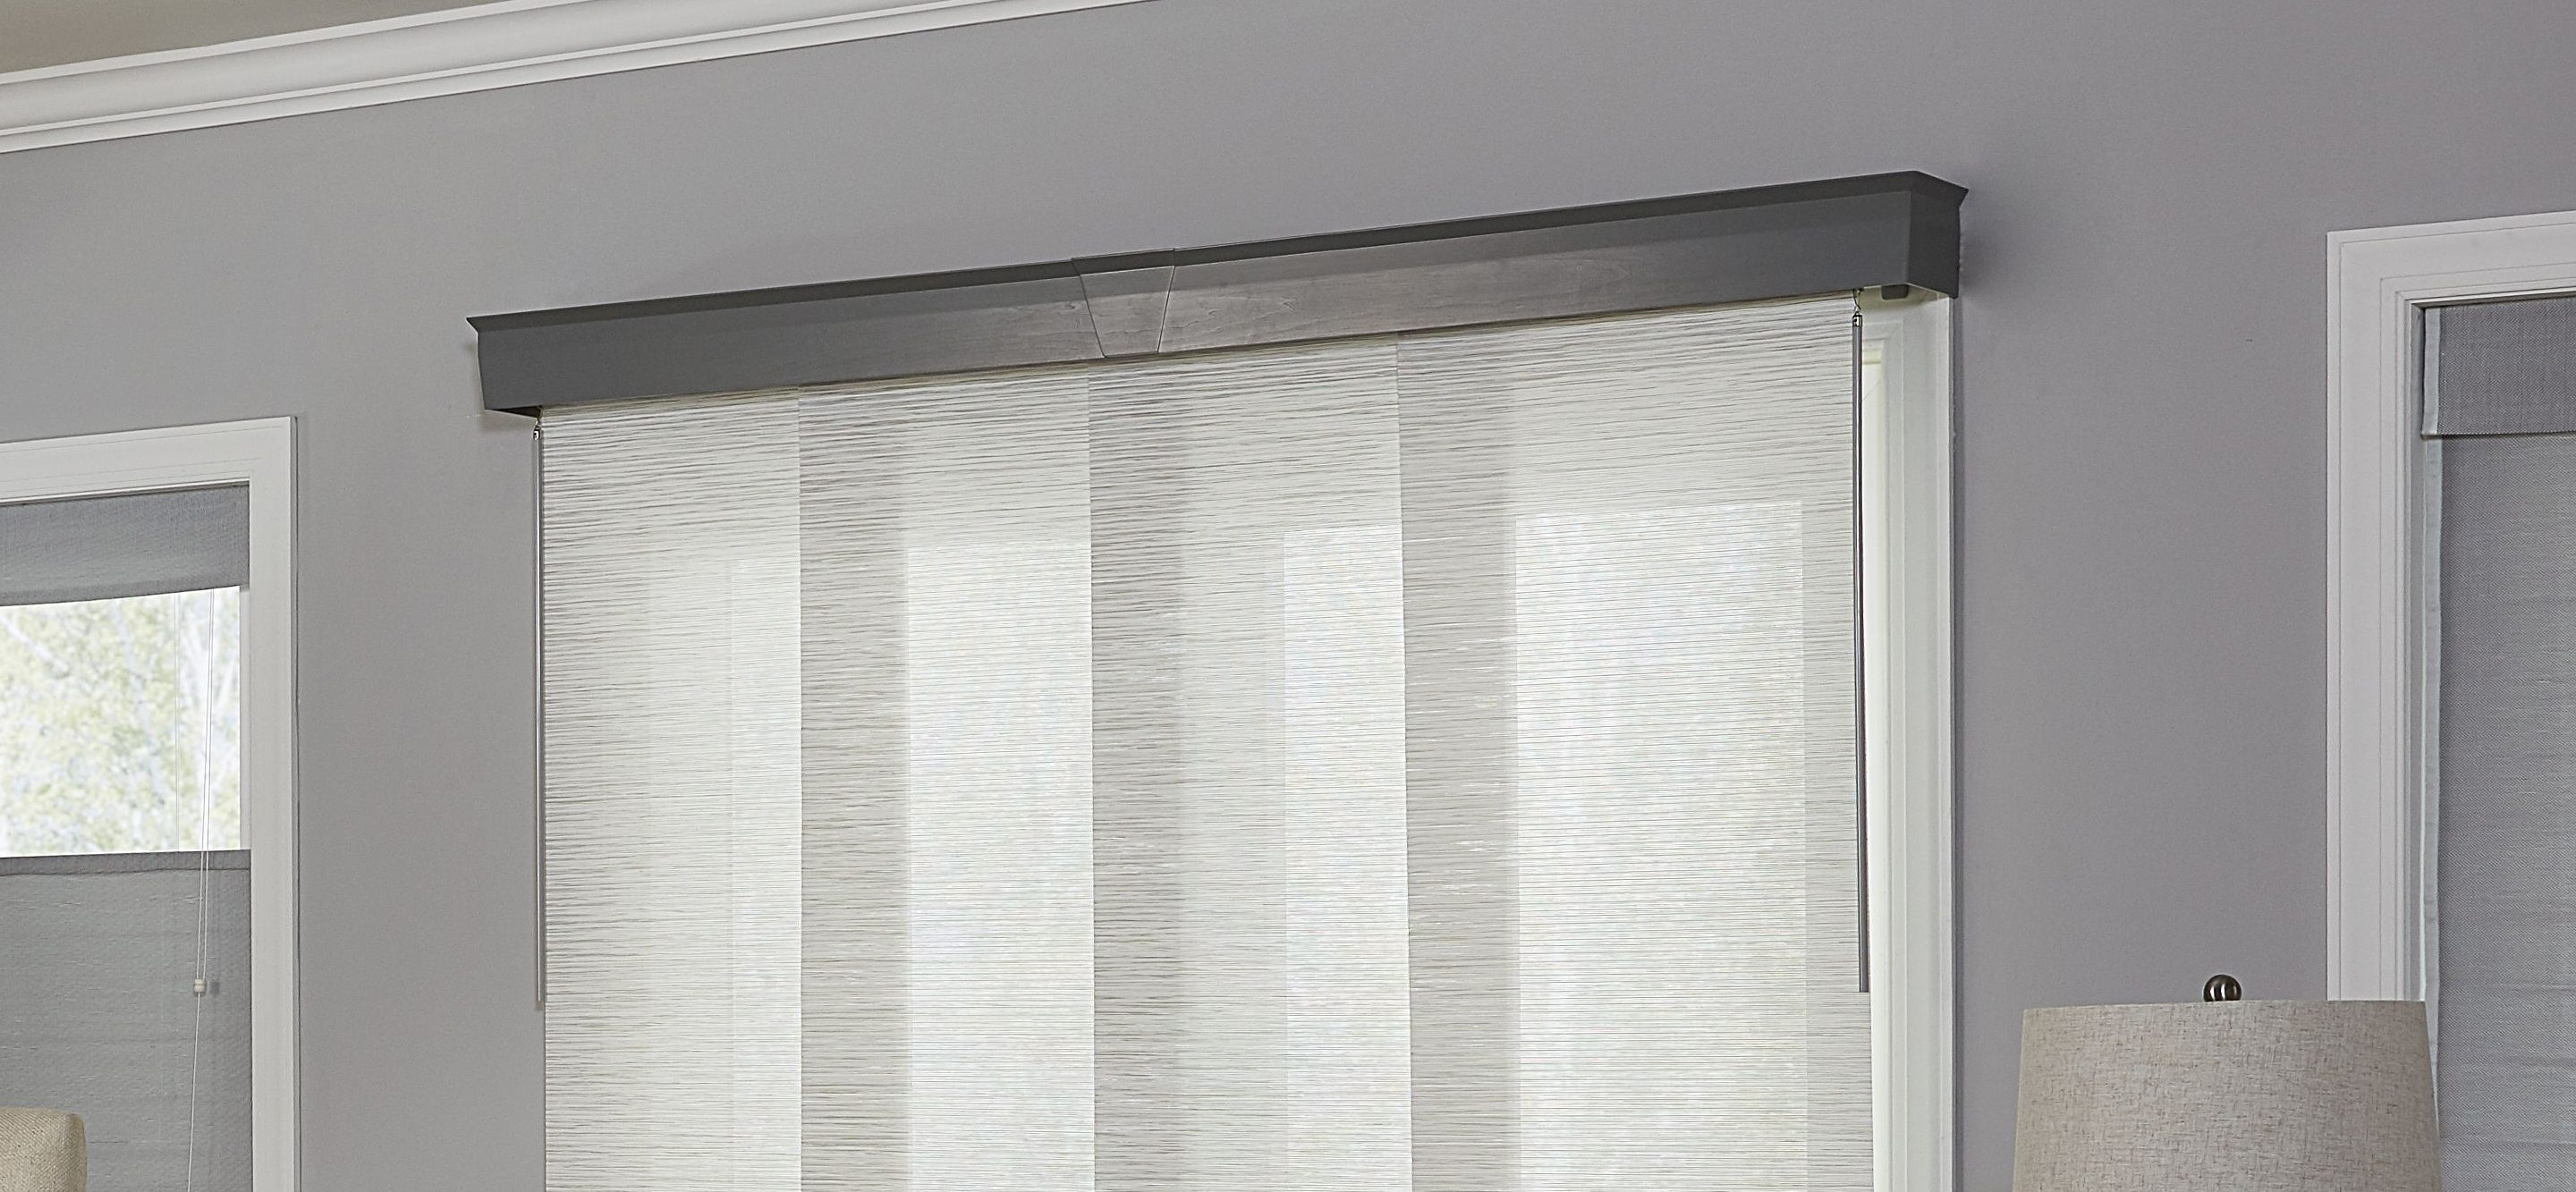 The Best Vertical Blinds Alternatives For Sliding Glass Doors for dimensions 2880 X 1333